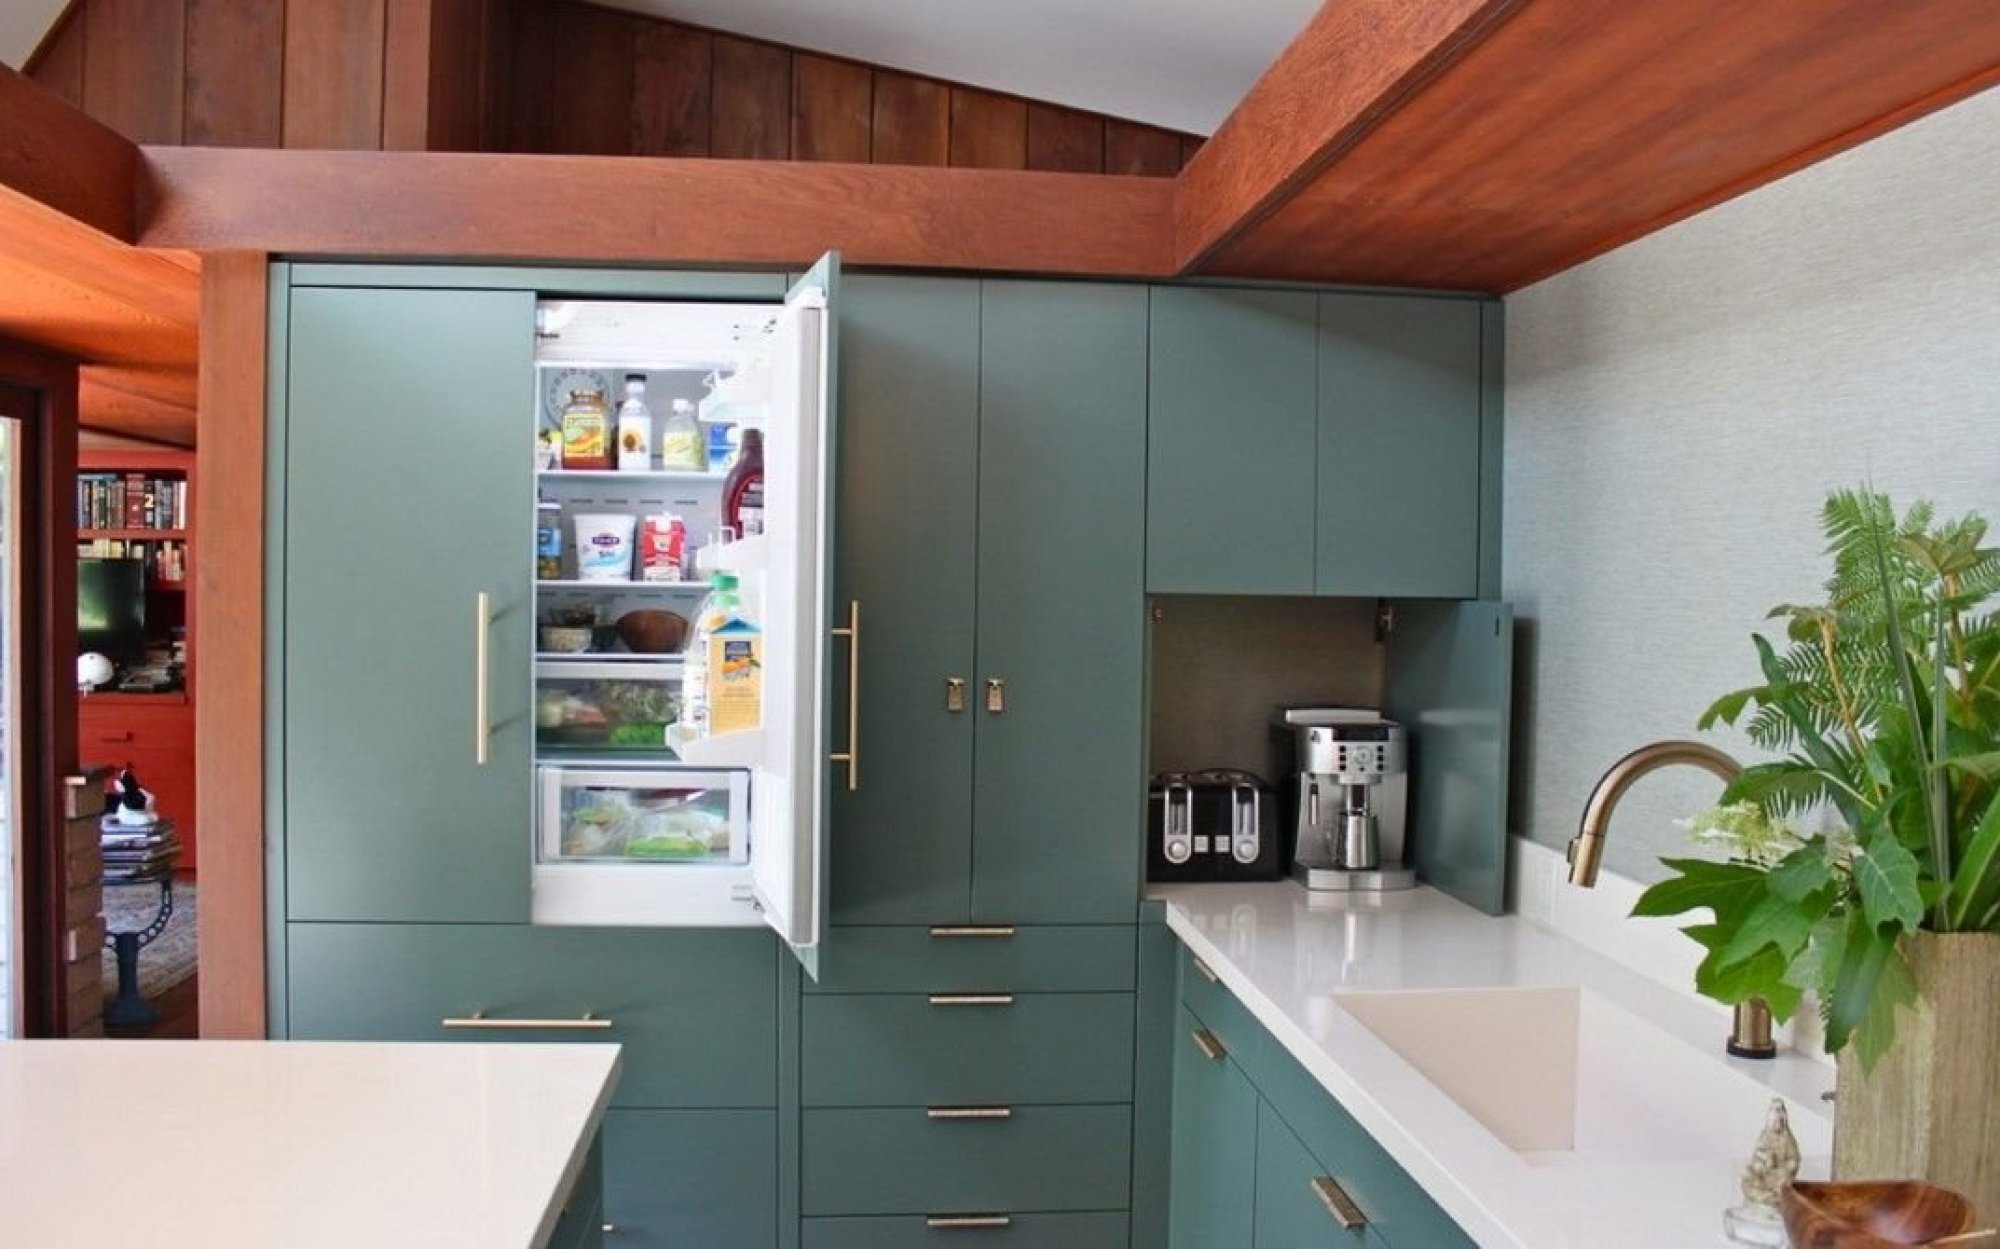 Cupboard glass fridge cooker. Встроенный холодильник на кухне. Встроенный холодильник в кухонный гарнитур. Холодильник встроенный в шкаф на кухне. Встроенные шкафчики на кухне.